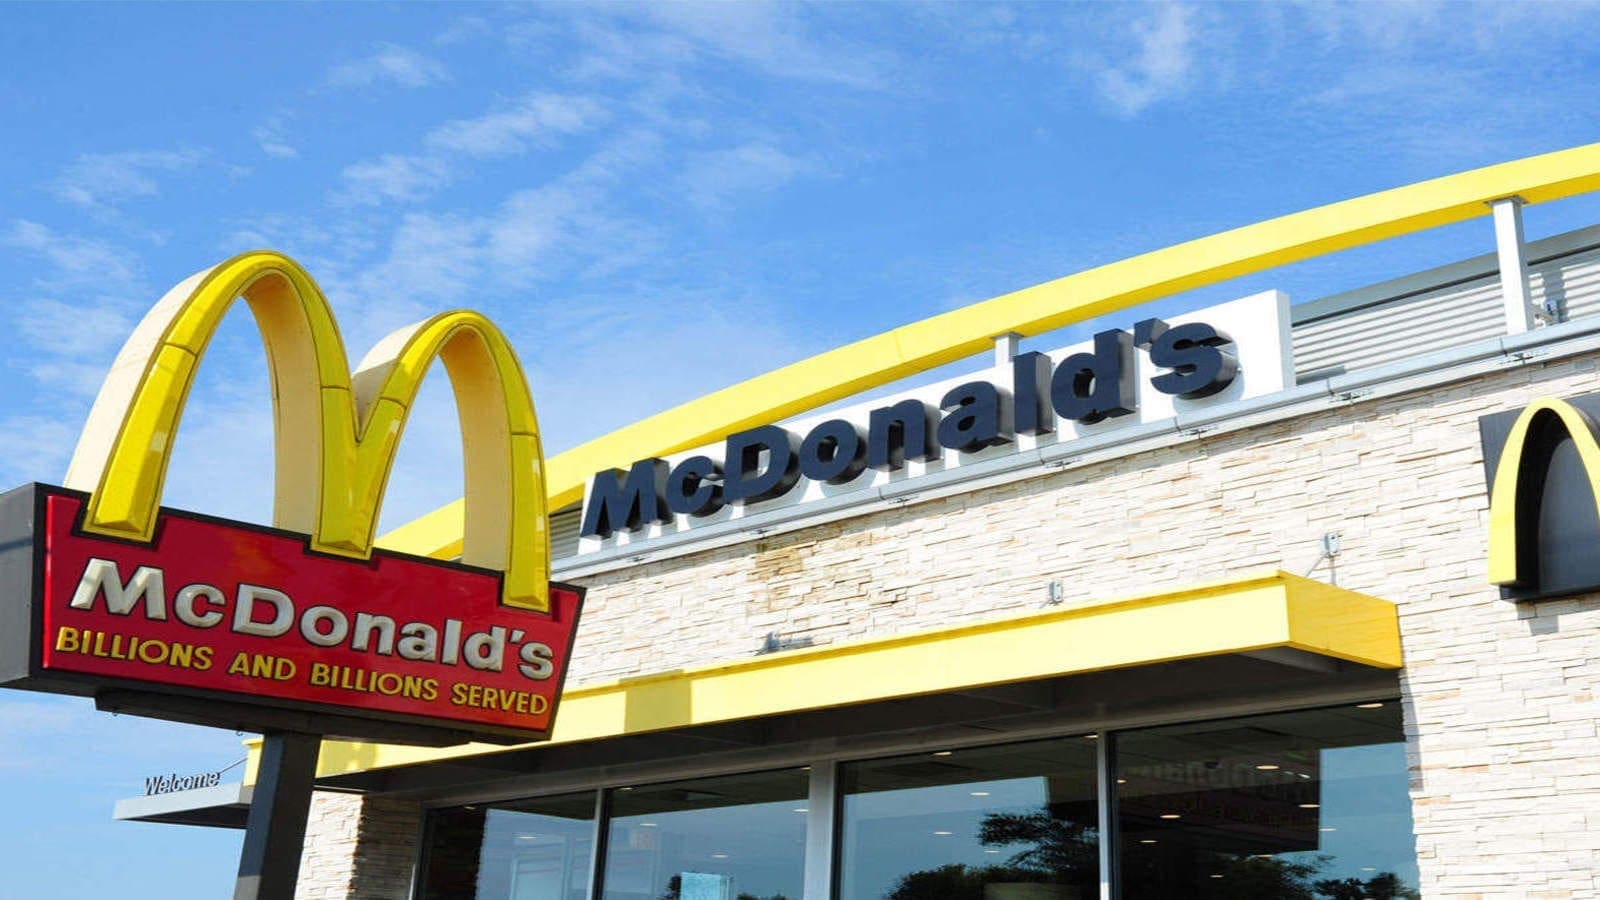 McDonalds to expand Italian restaurant footprint by 200 to meet surging demand